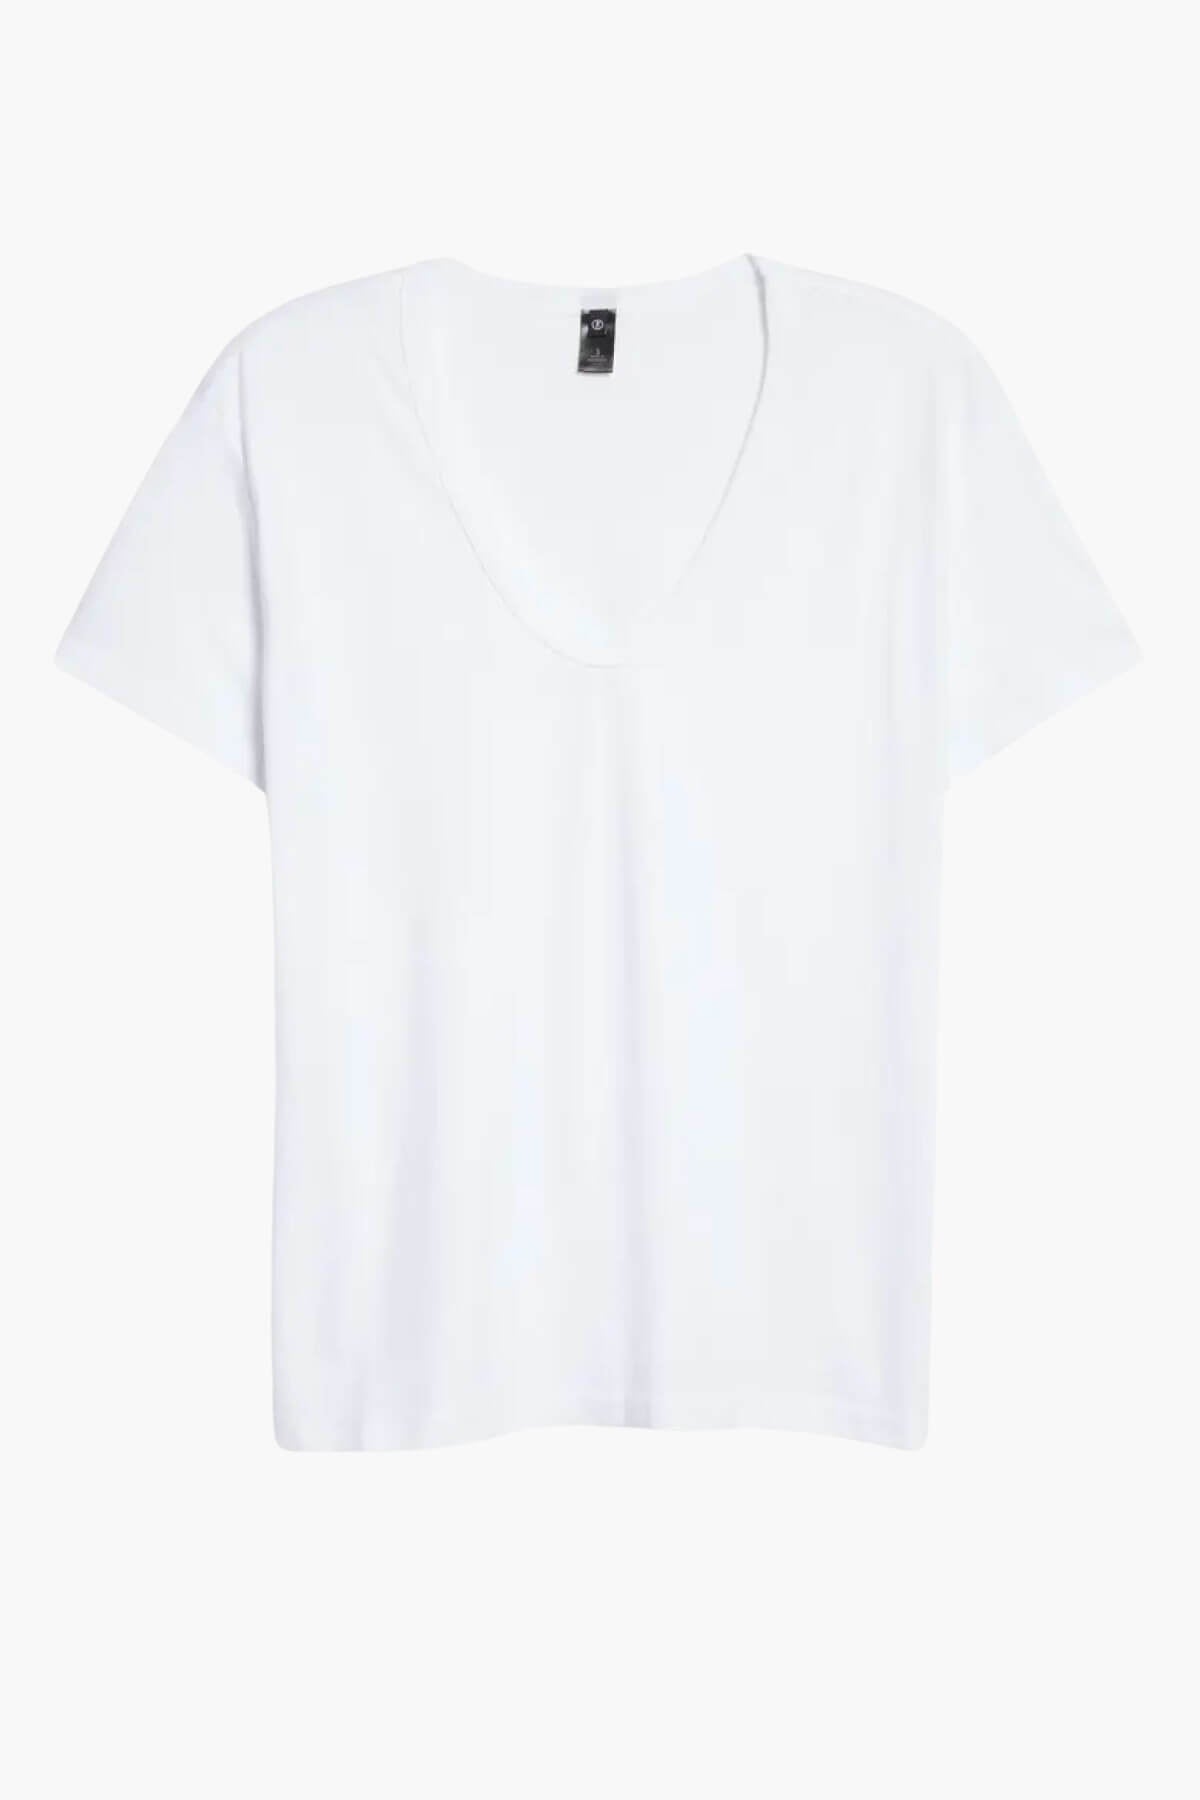 AG Denim Aspen U-Neck T-Shirt - True White